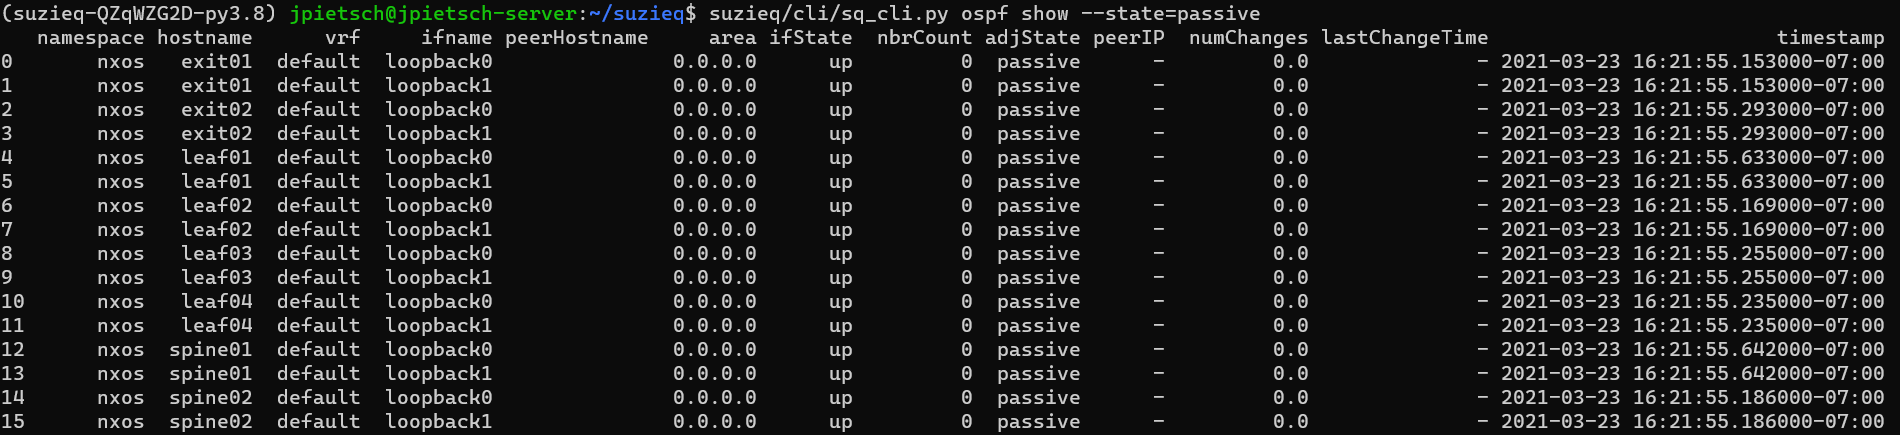 Suzieq OSPF show passive peers